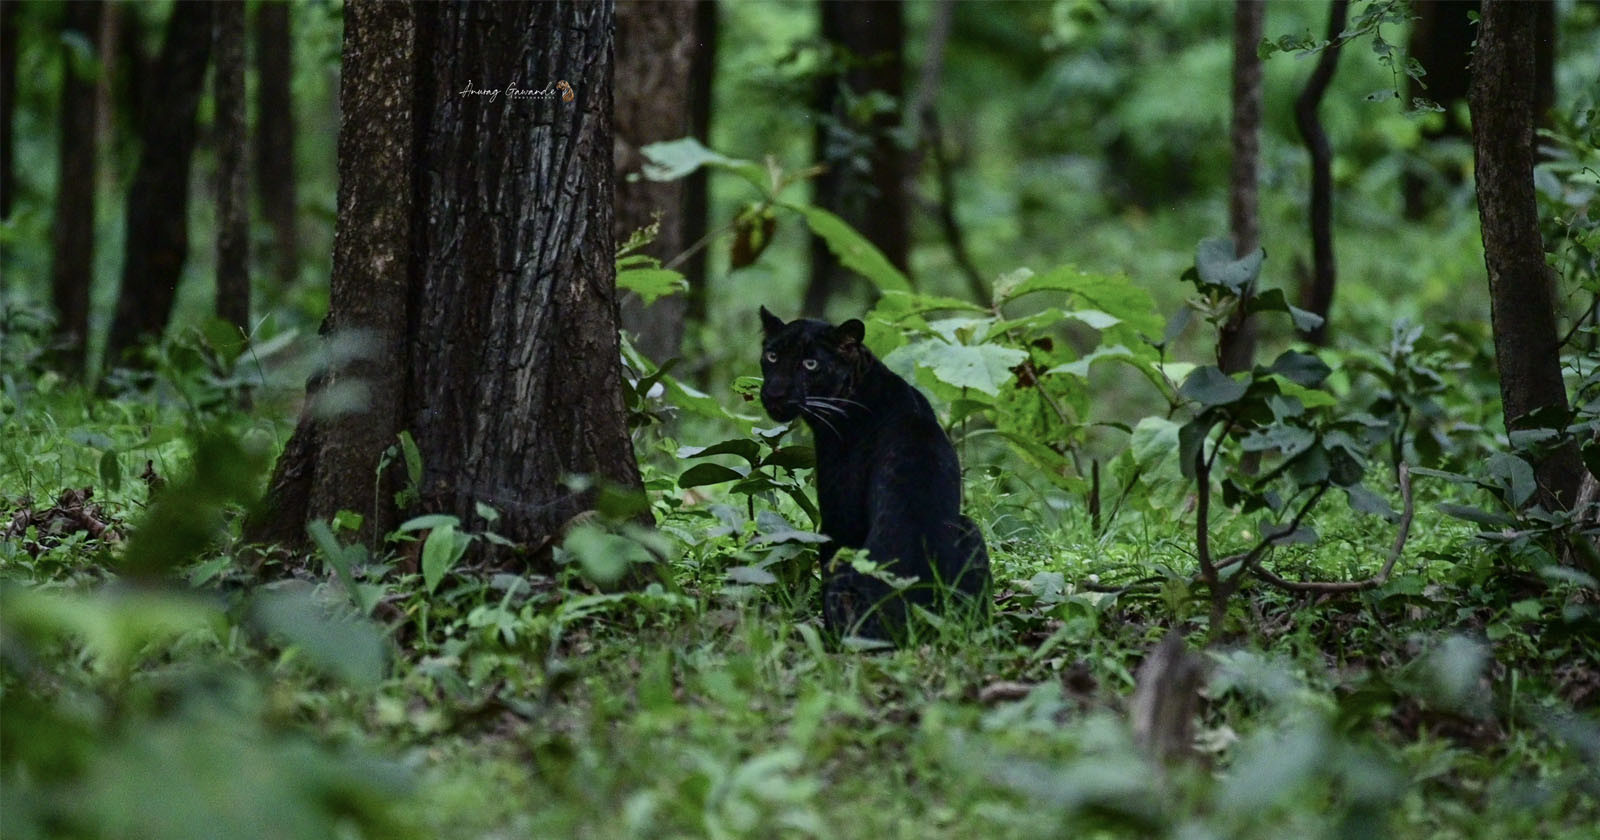  photographer waits nine hours capture thrilling black leopard 